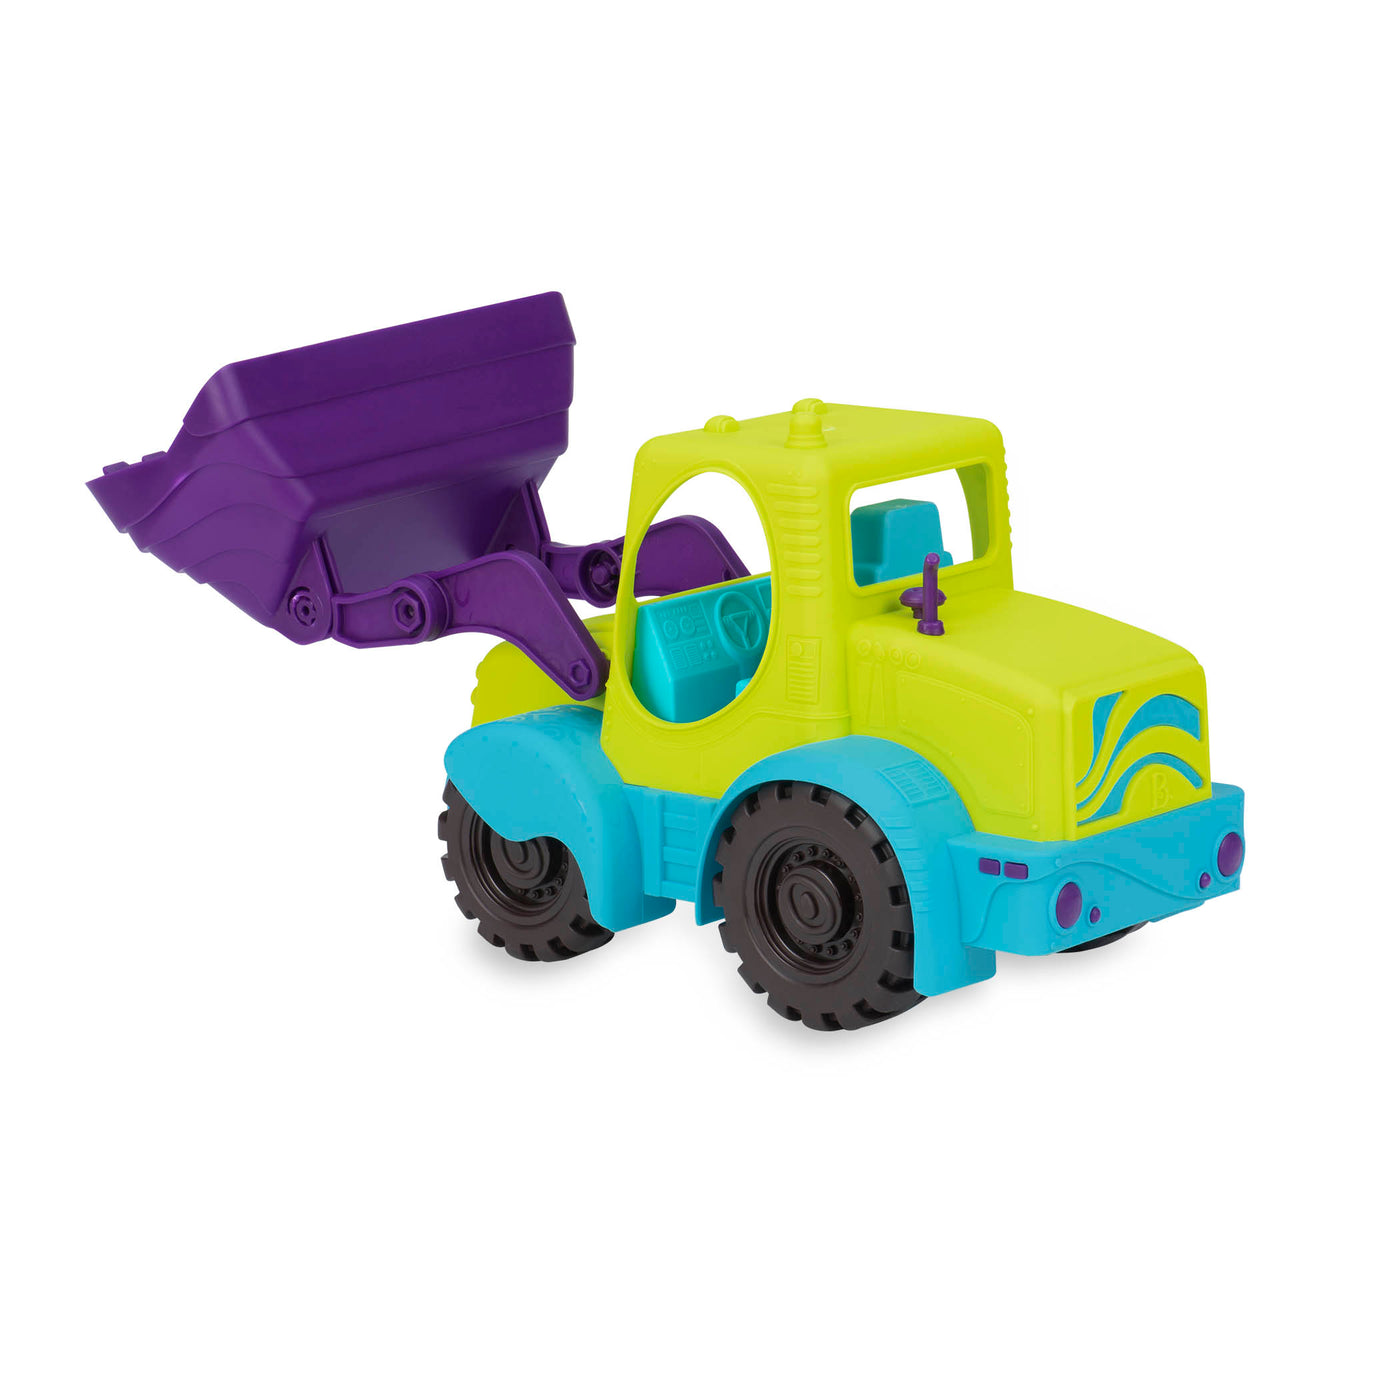 Toy excavator truck